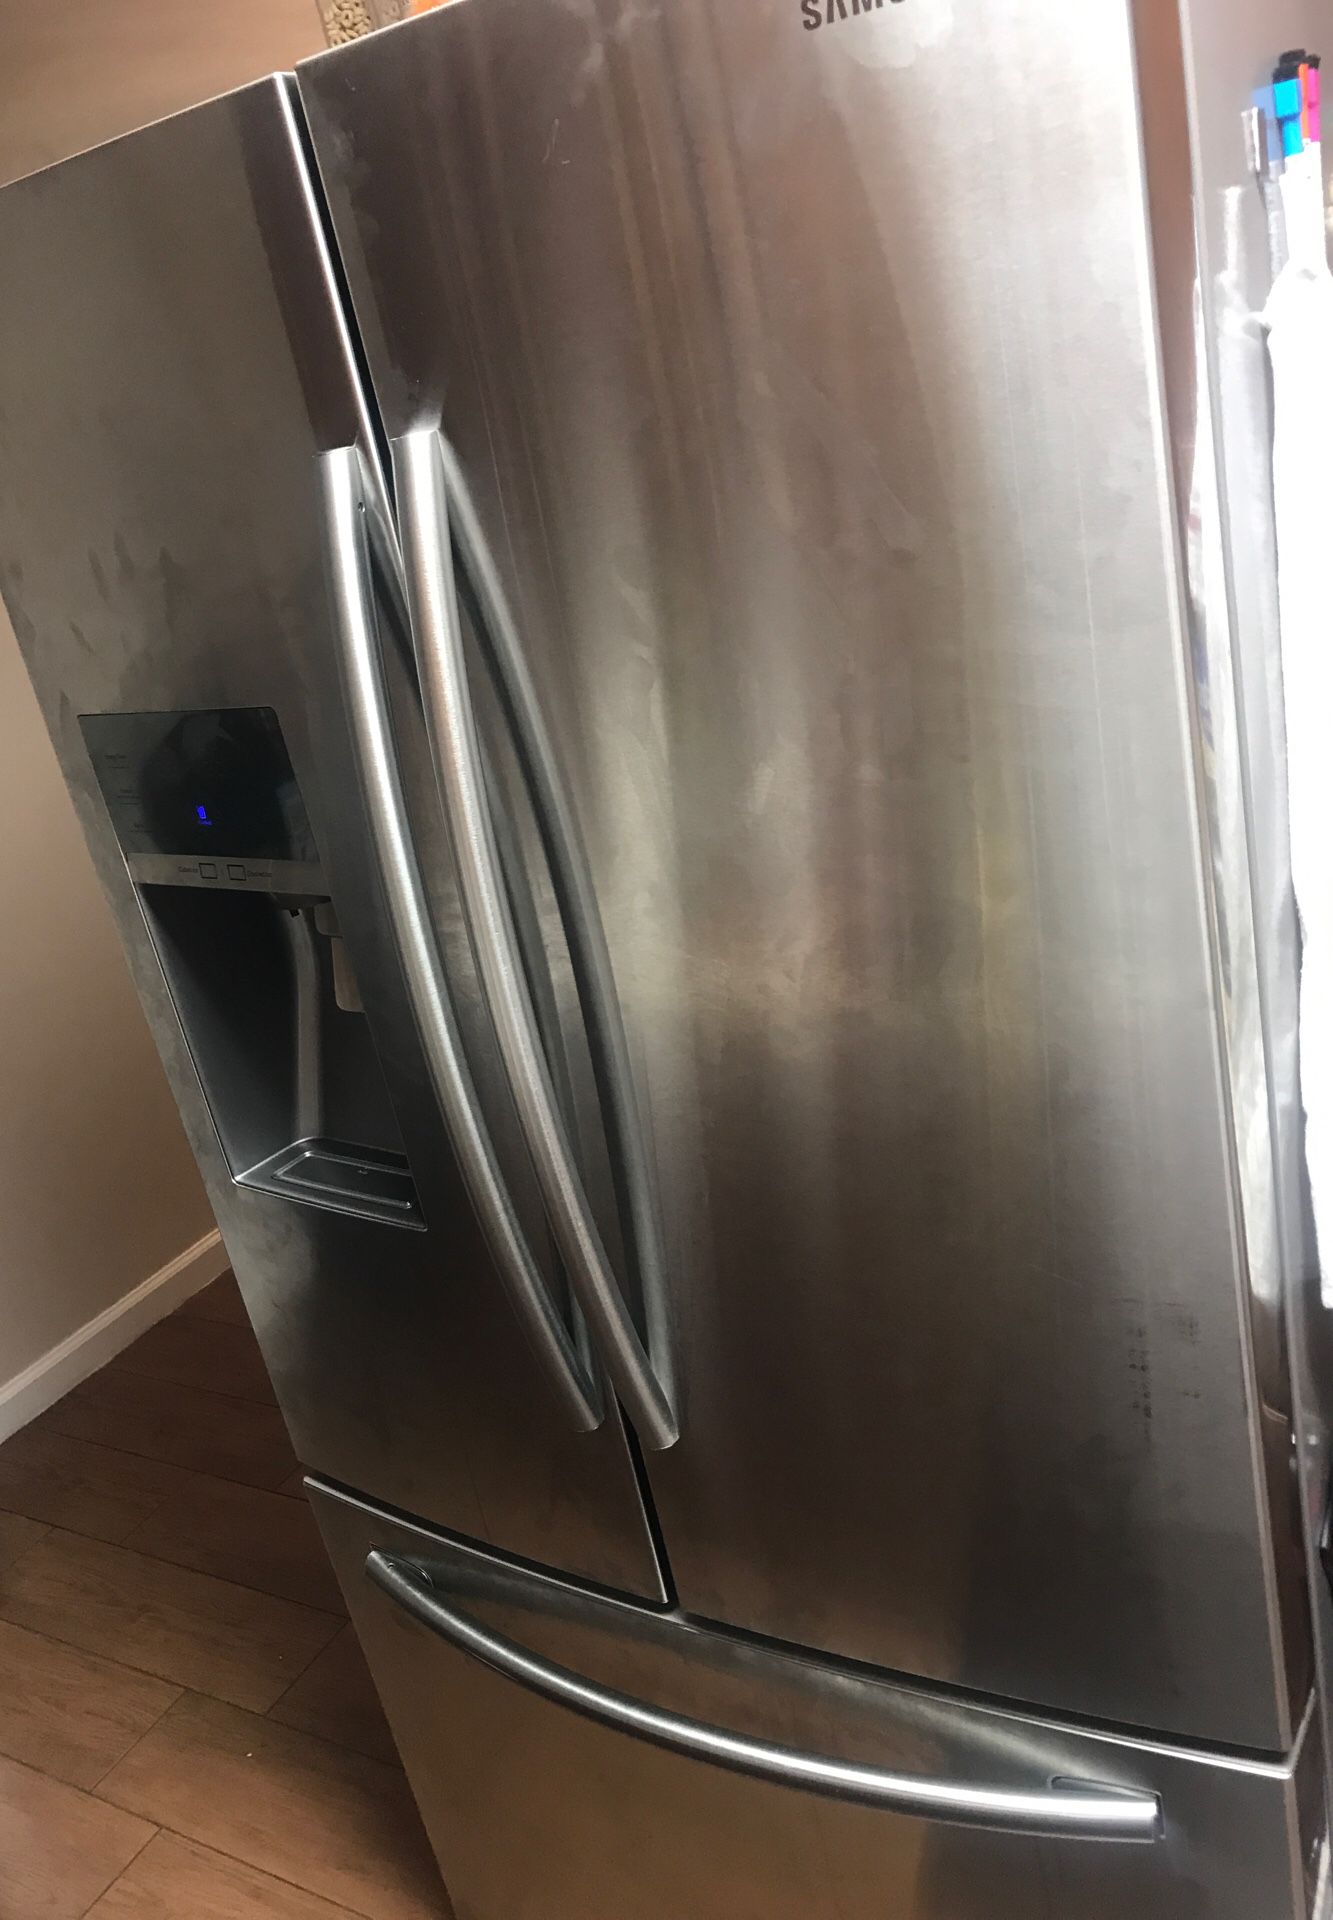 Samsung French Door Bottom freezer Refrigerator